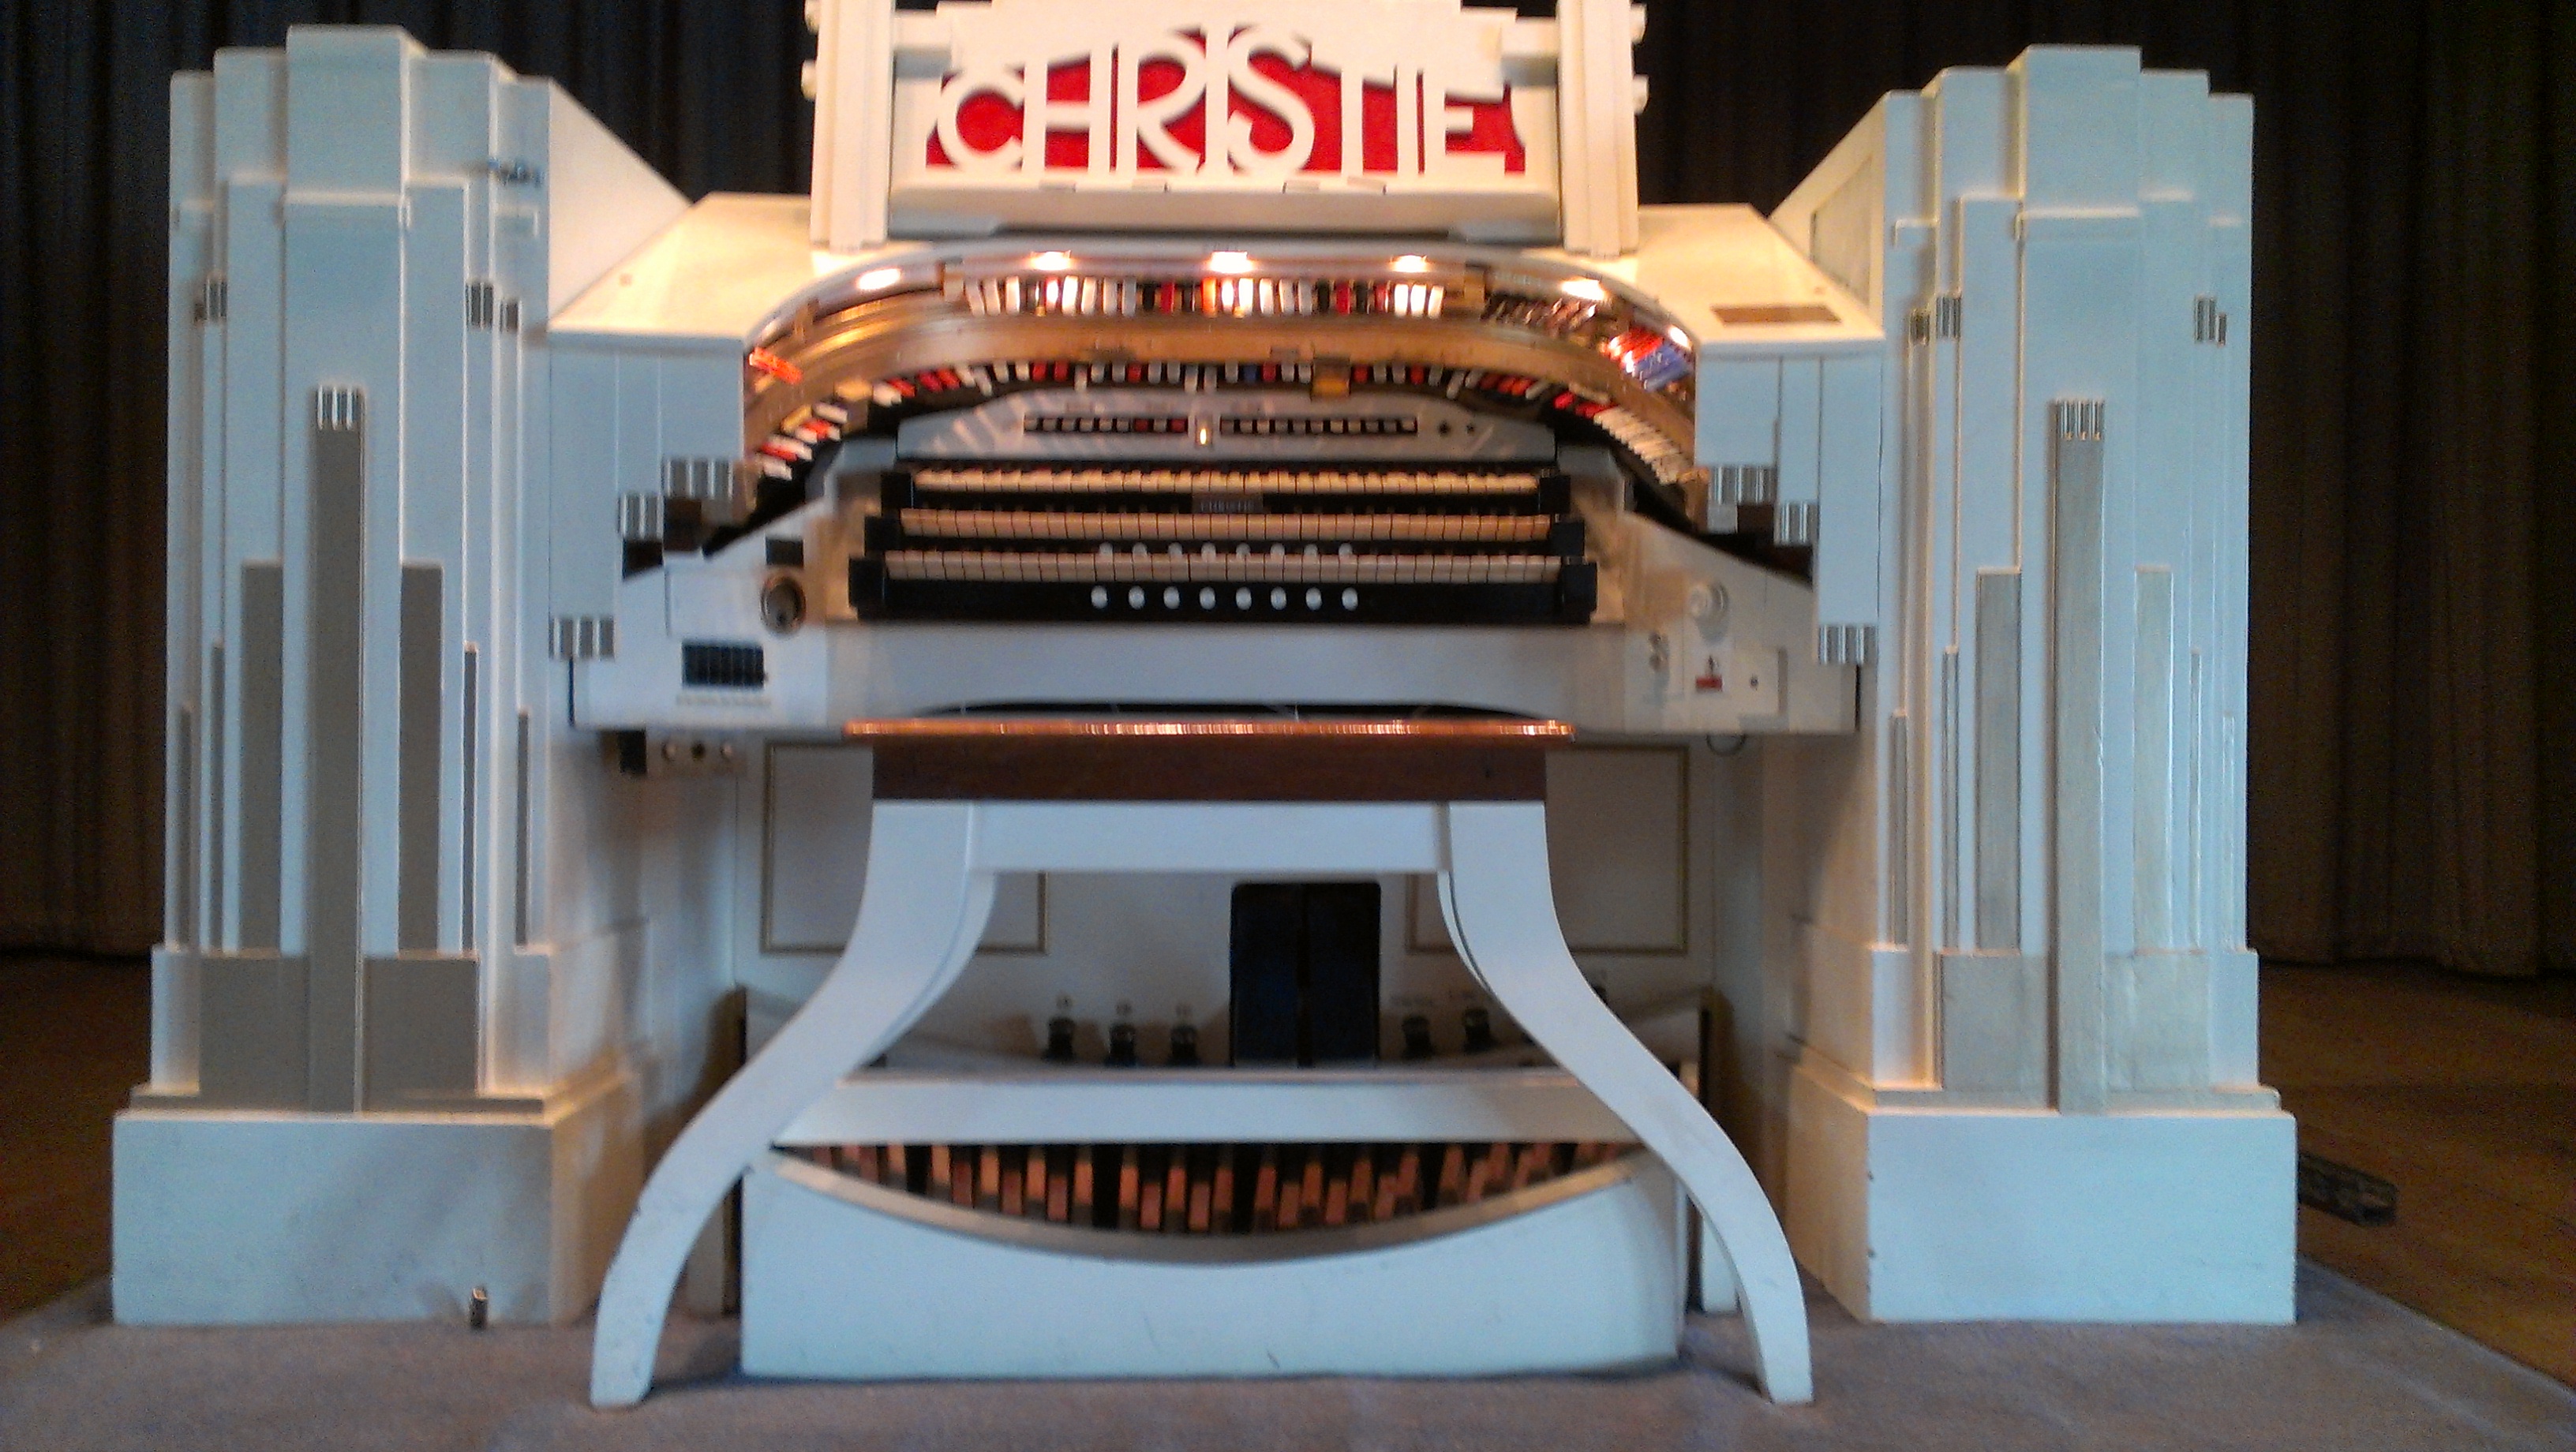 photo of the Christie Organ